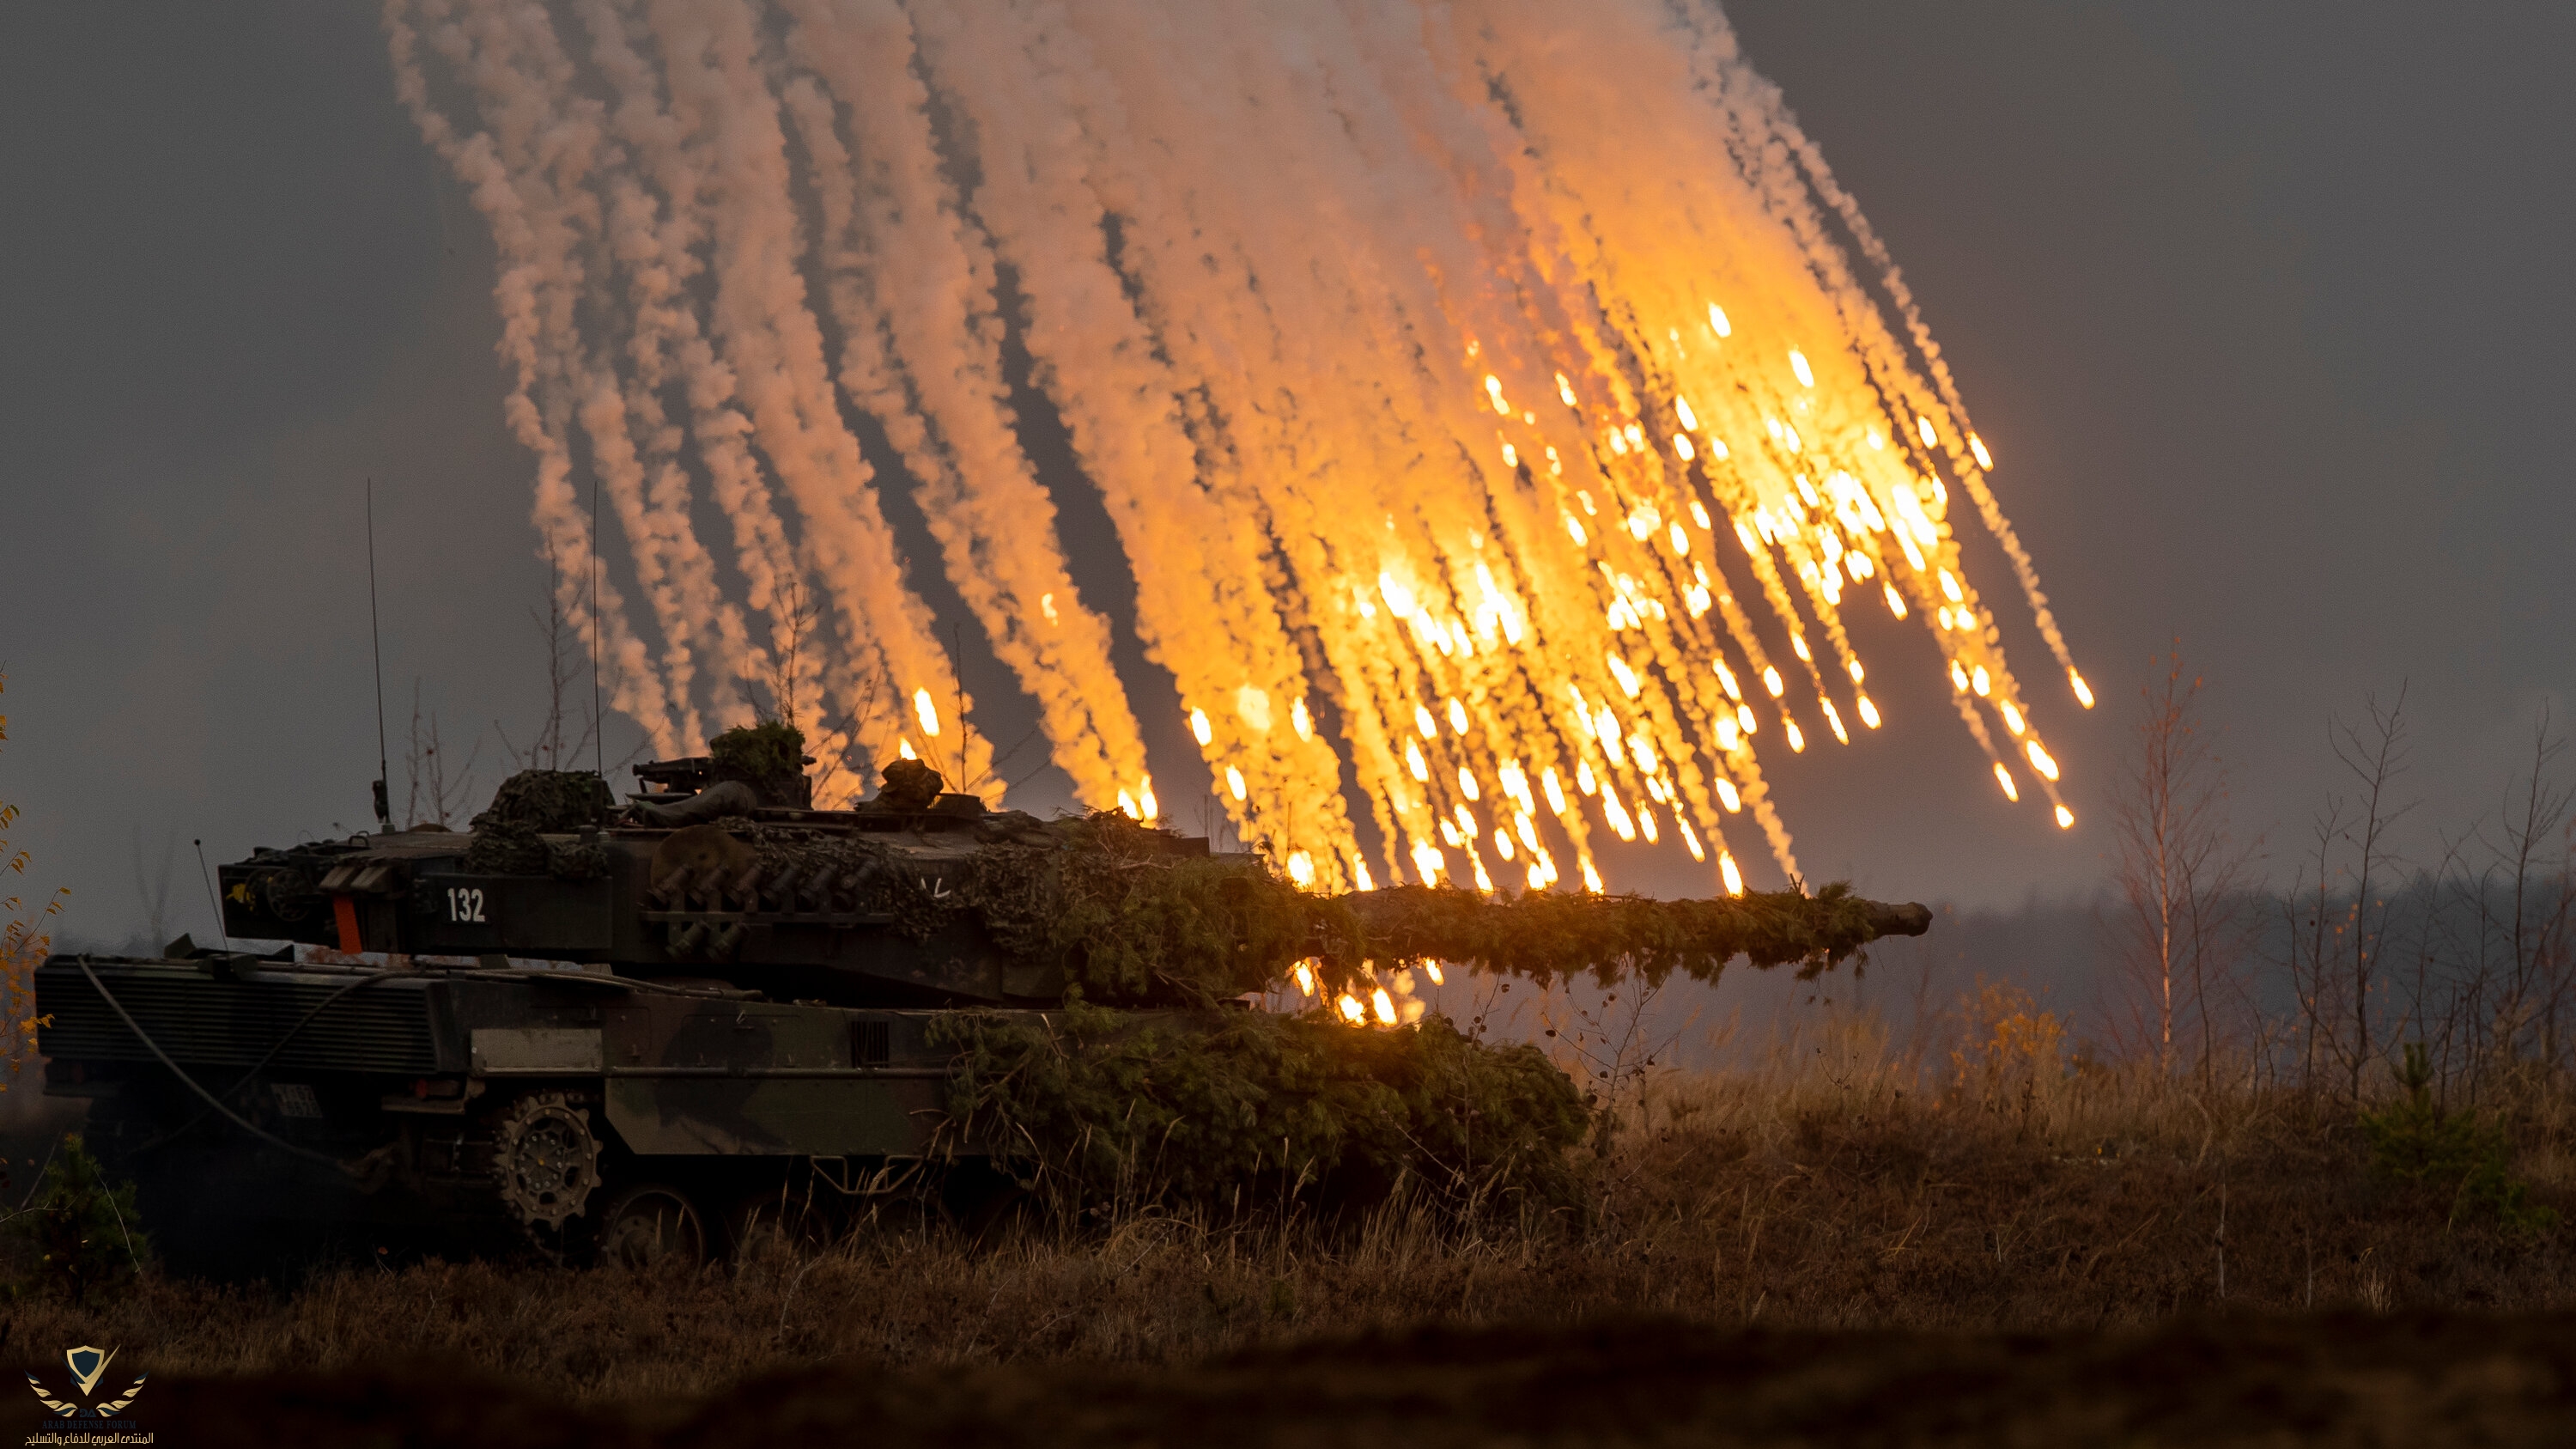 19ukraine-briefing-tanks-explainer-topart-videoSixteenByNine3000.jpg